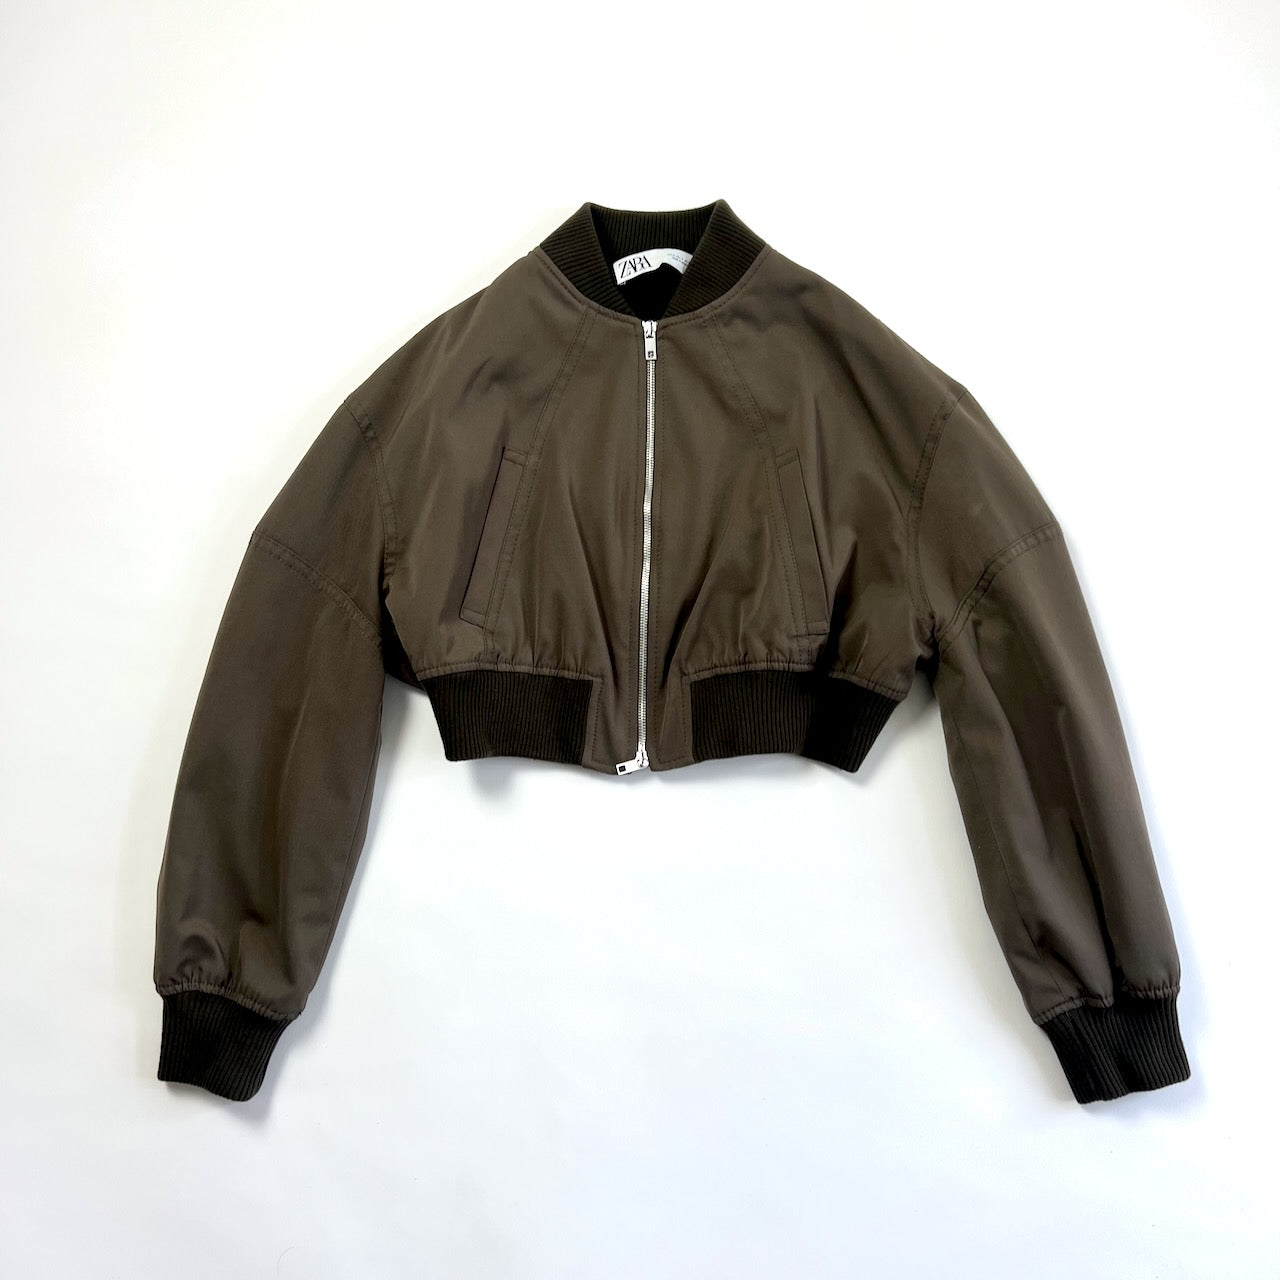 Zara cropped khaki wool blend bomber jacket